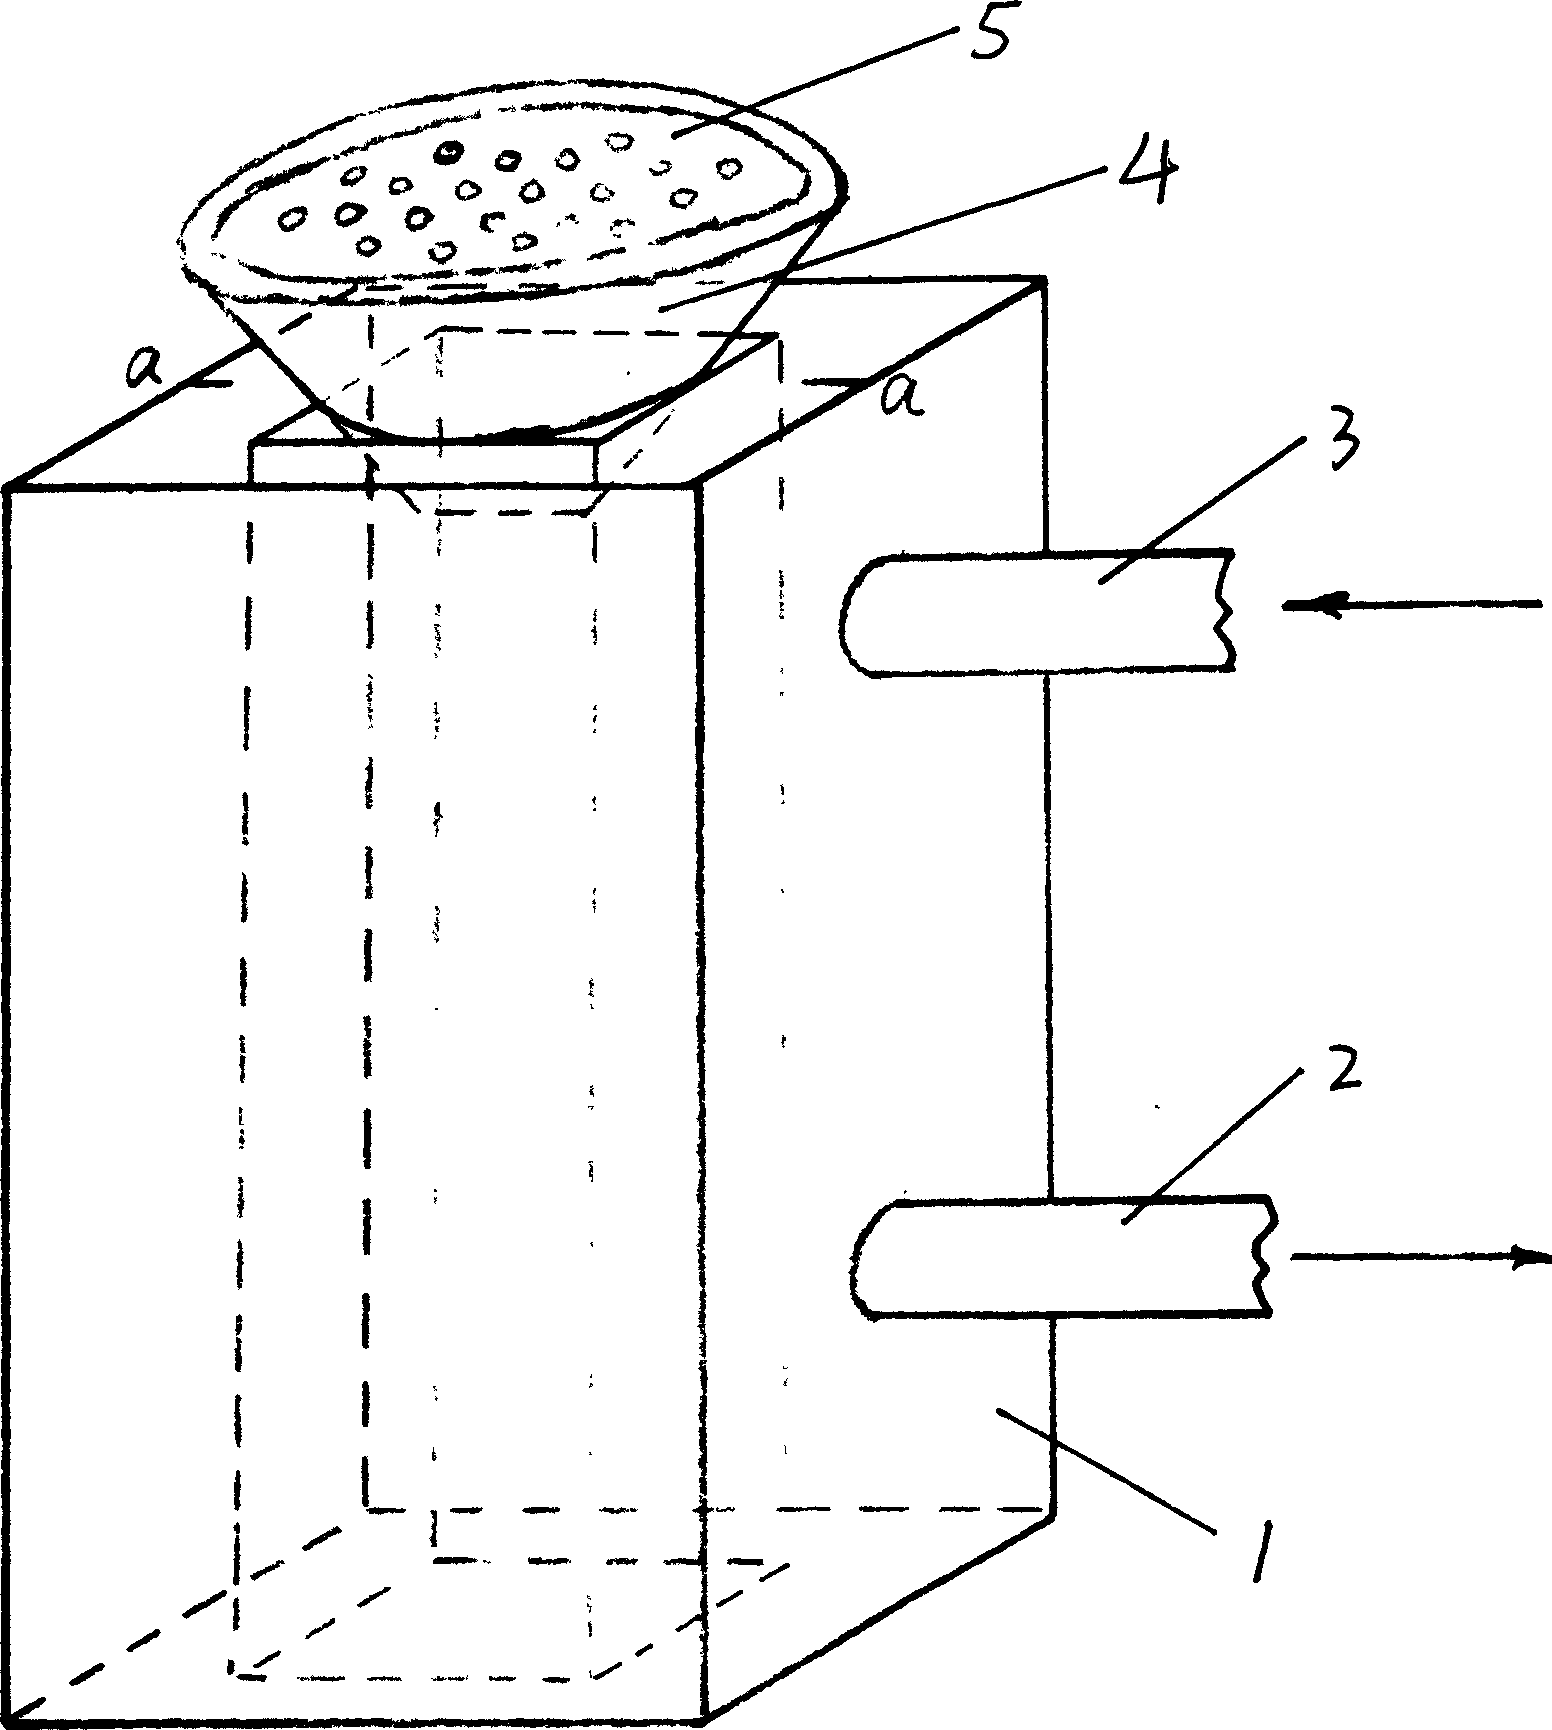 Method for producing high puriy, laminar cast ingot of Nd-Fe-B alloys